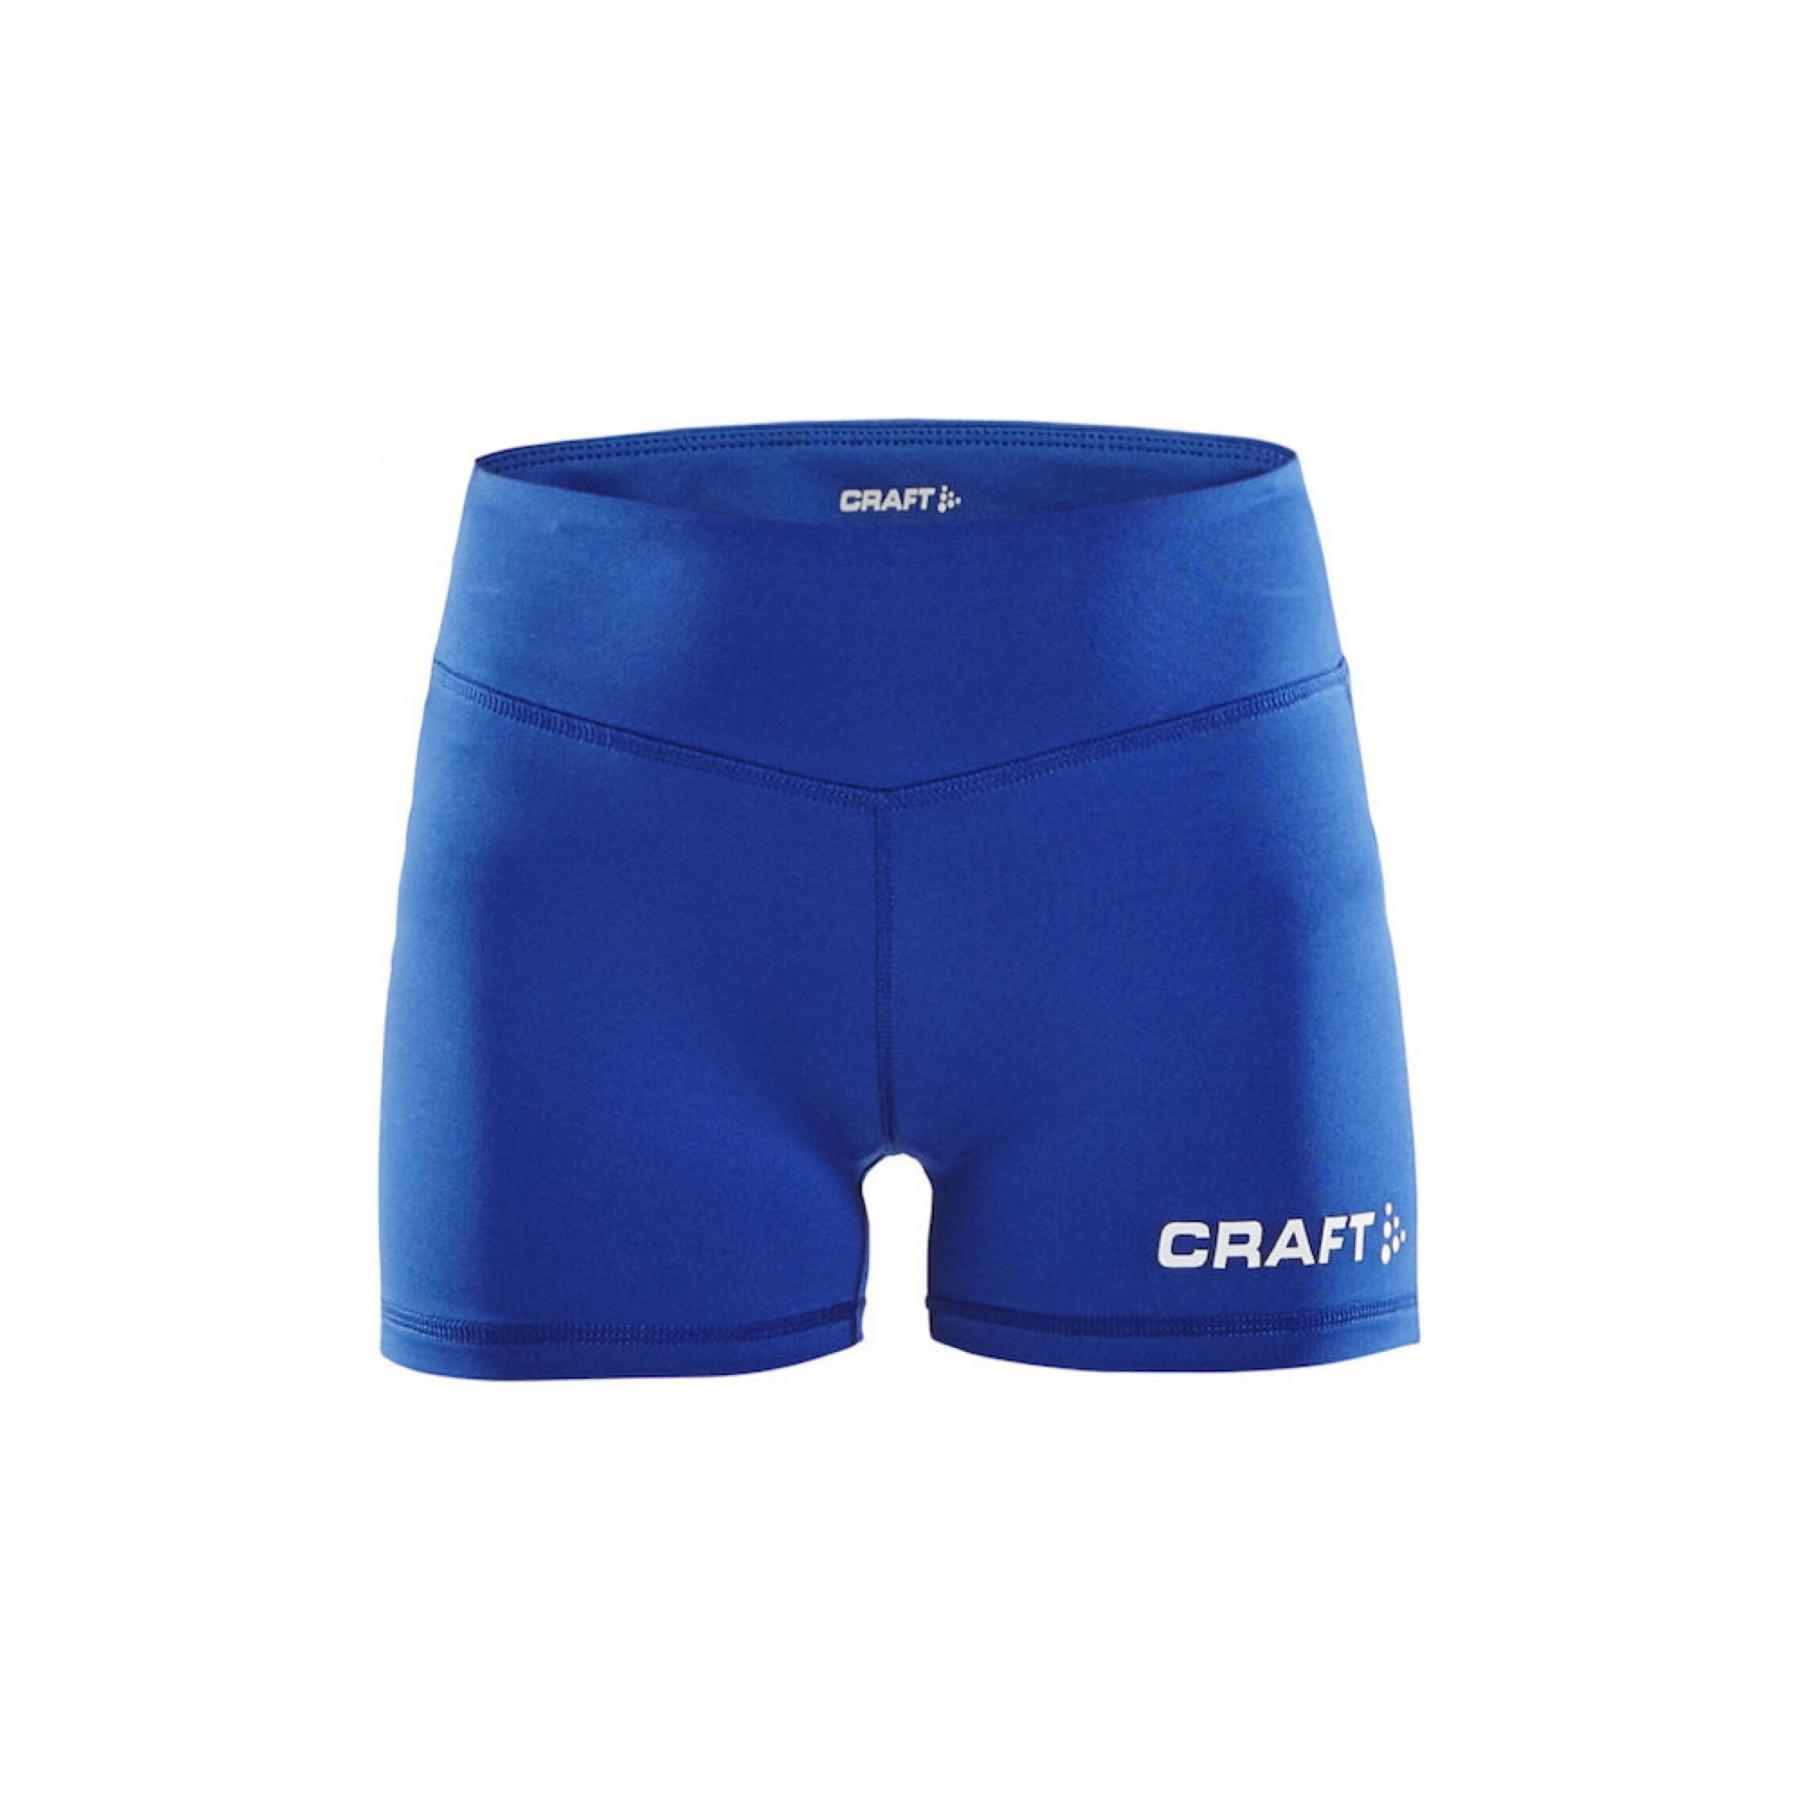 Kinder shorts Craft squad